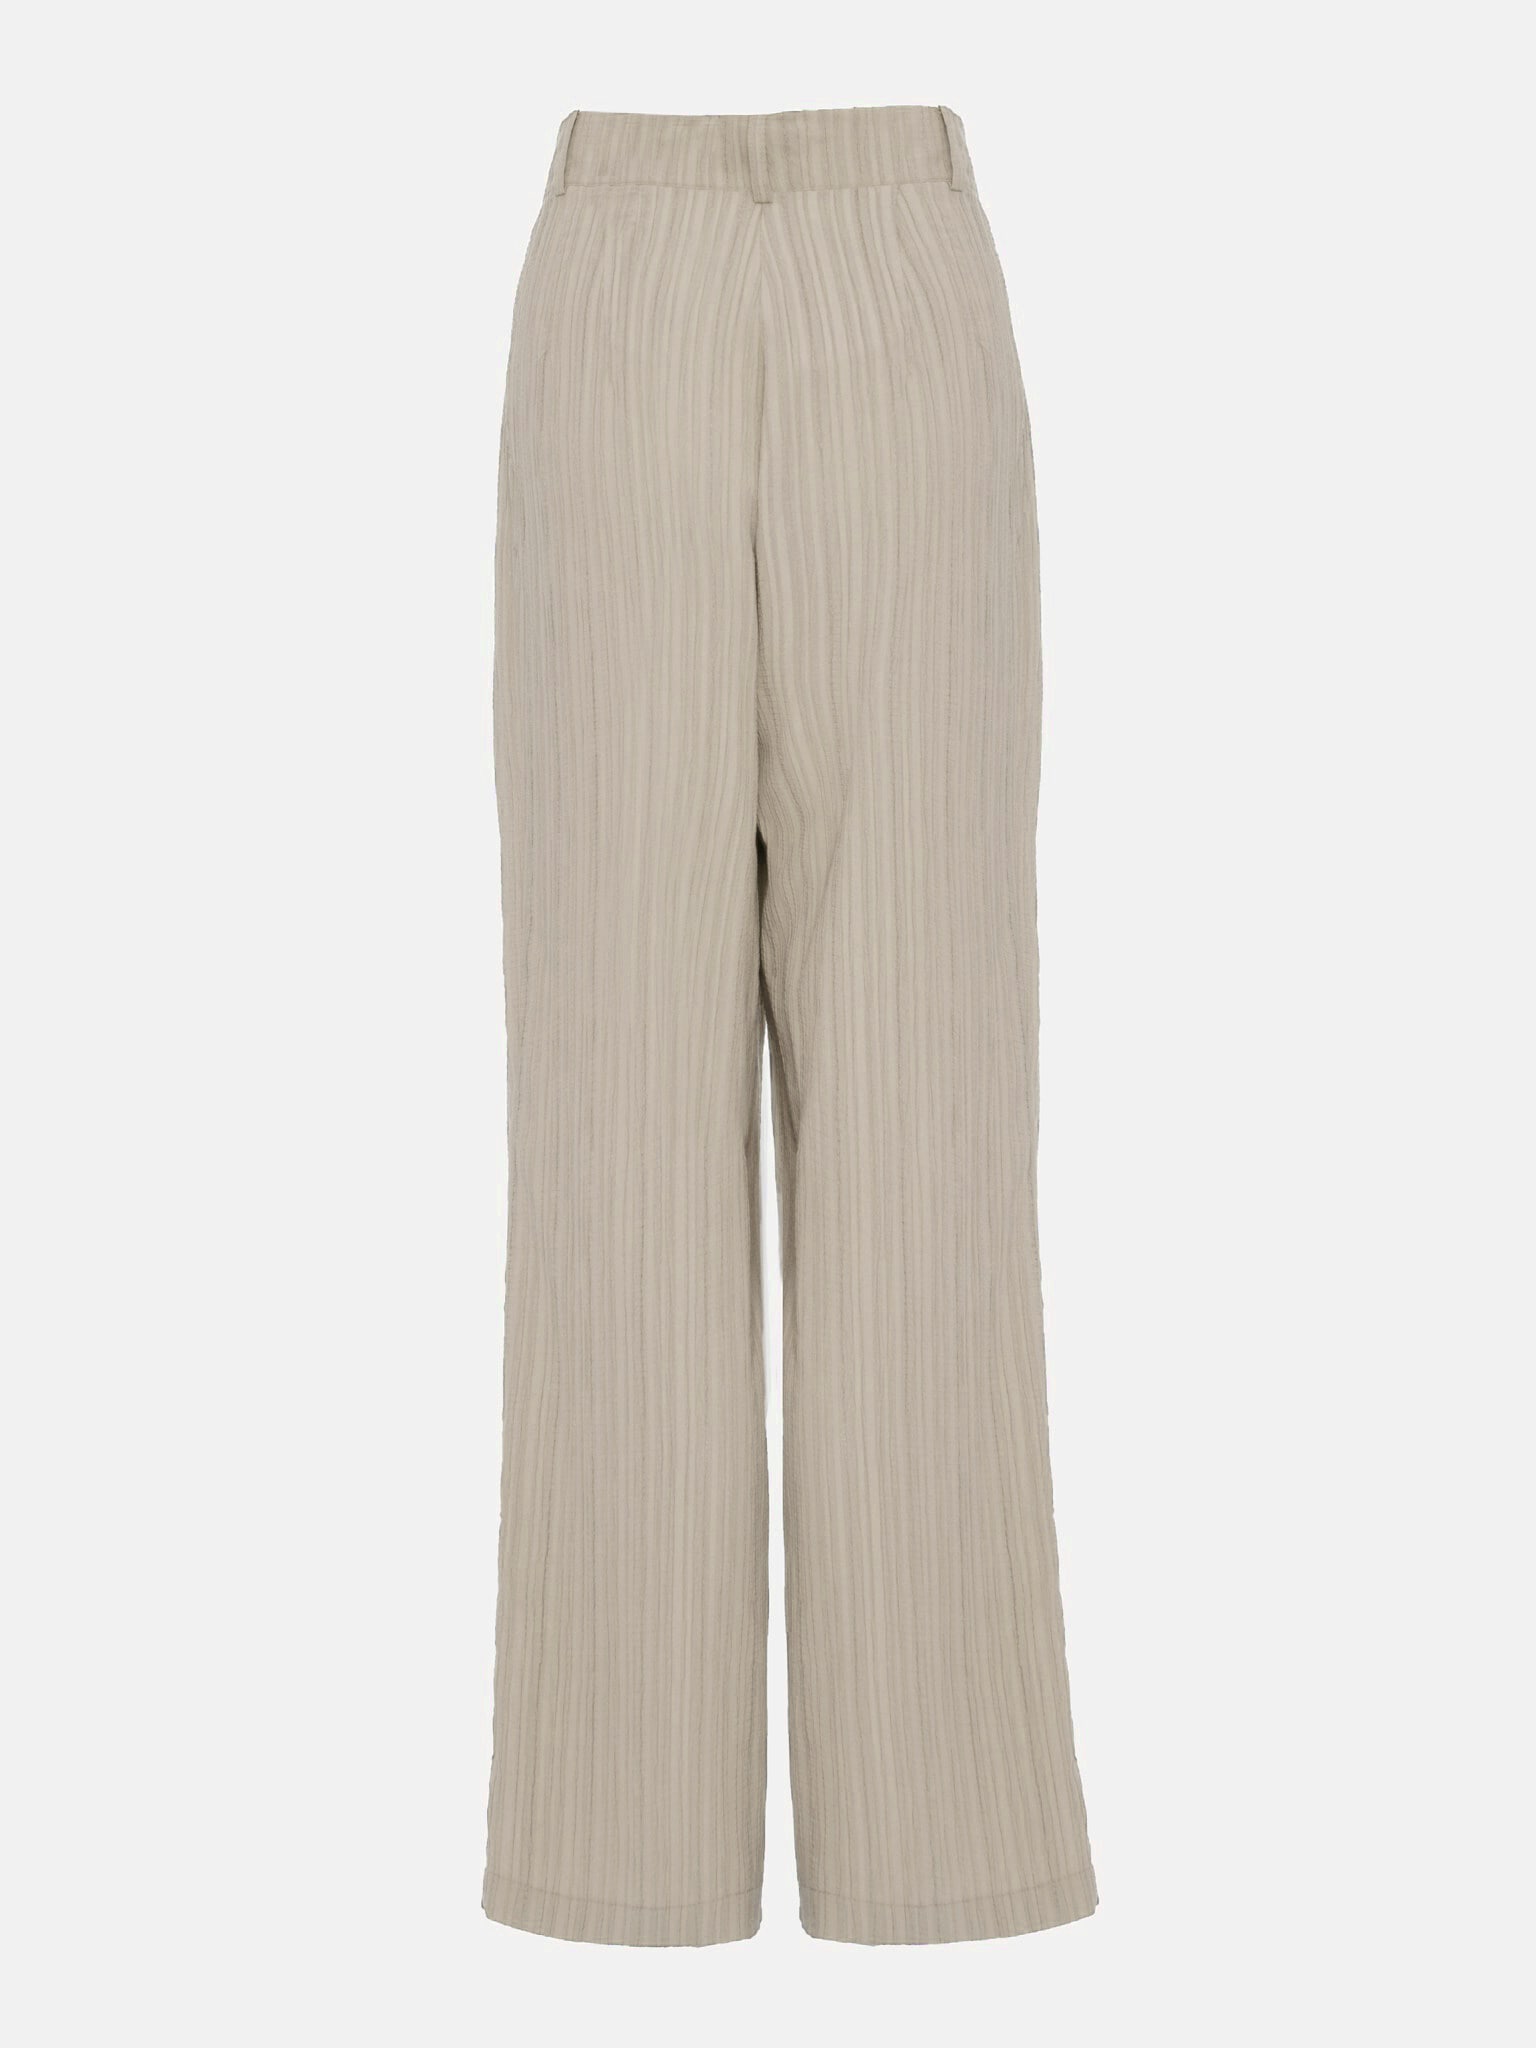 Wide-leg textured pants